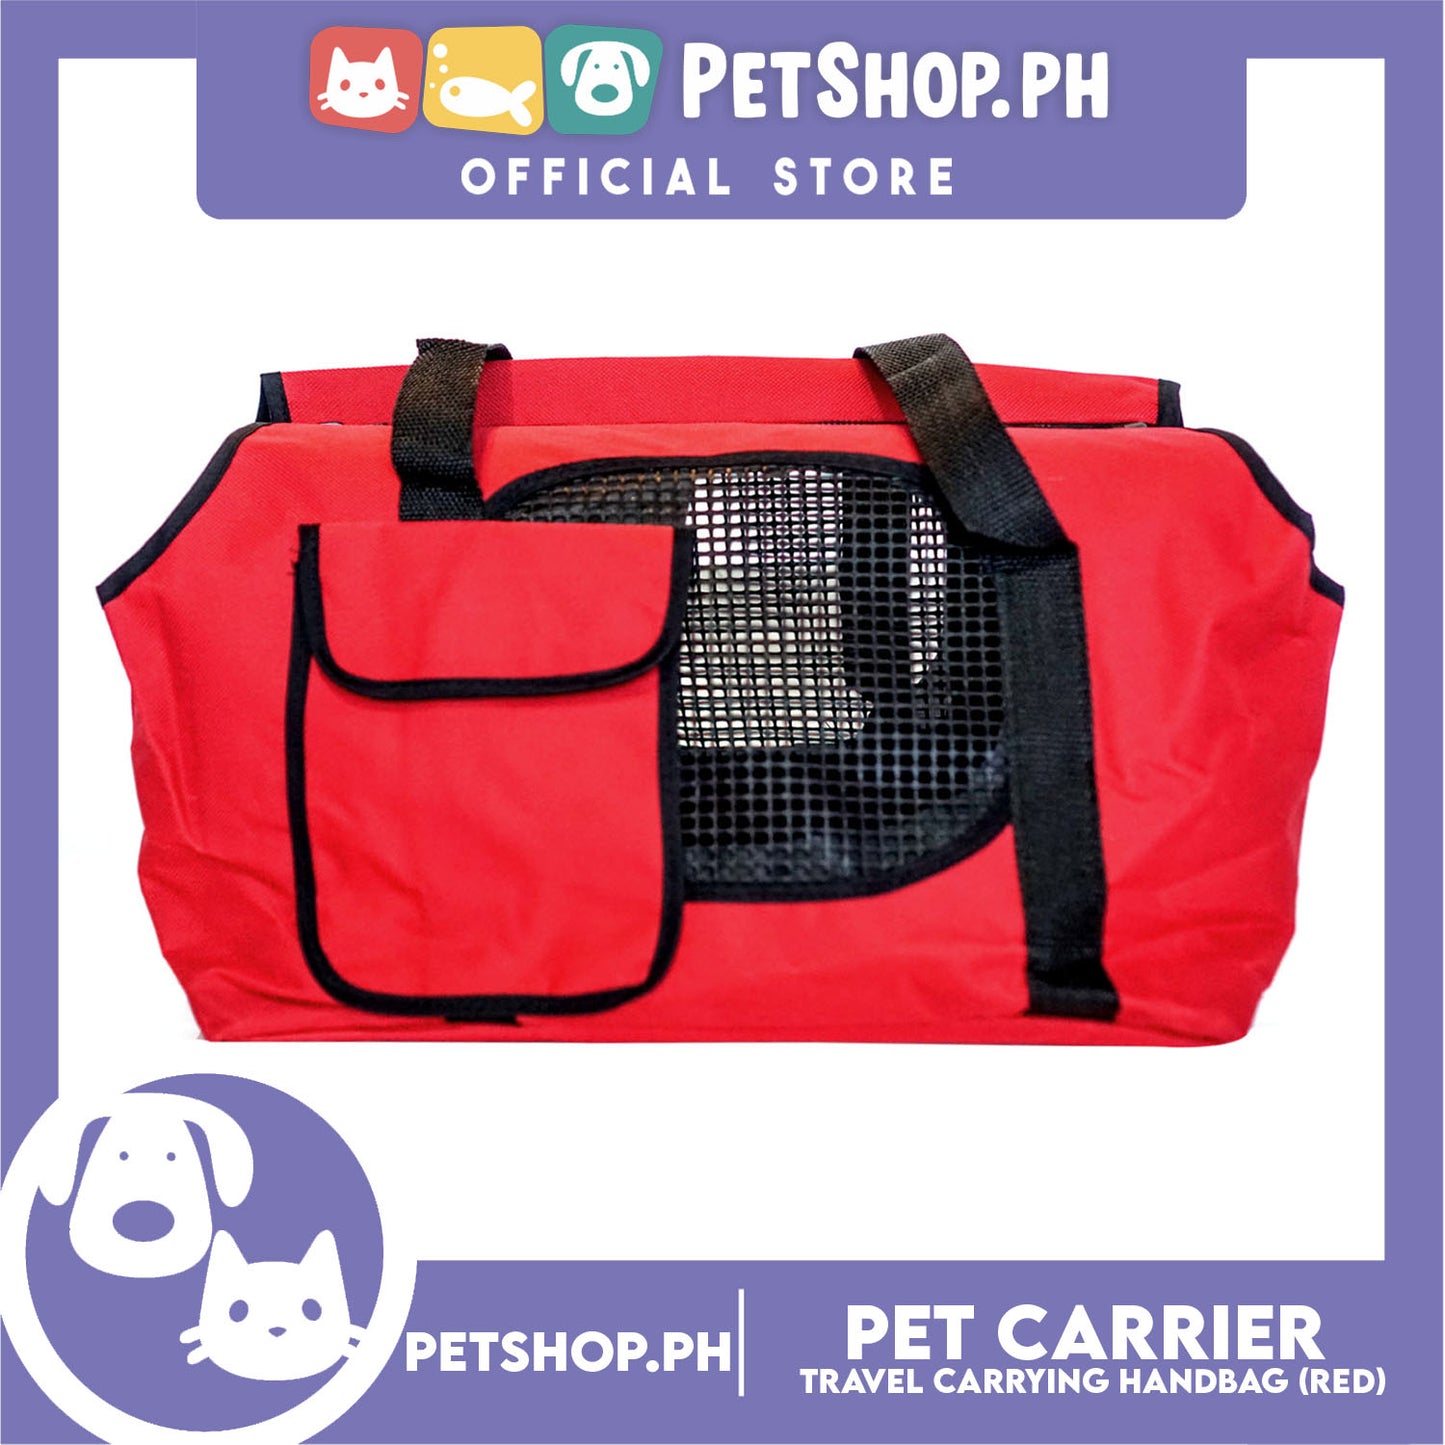 Pet Carrier Summer Travel Carrying Handbag, Shoulder Bag L34 x W13 x H22 Small (Red)